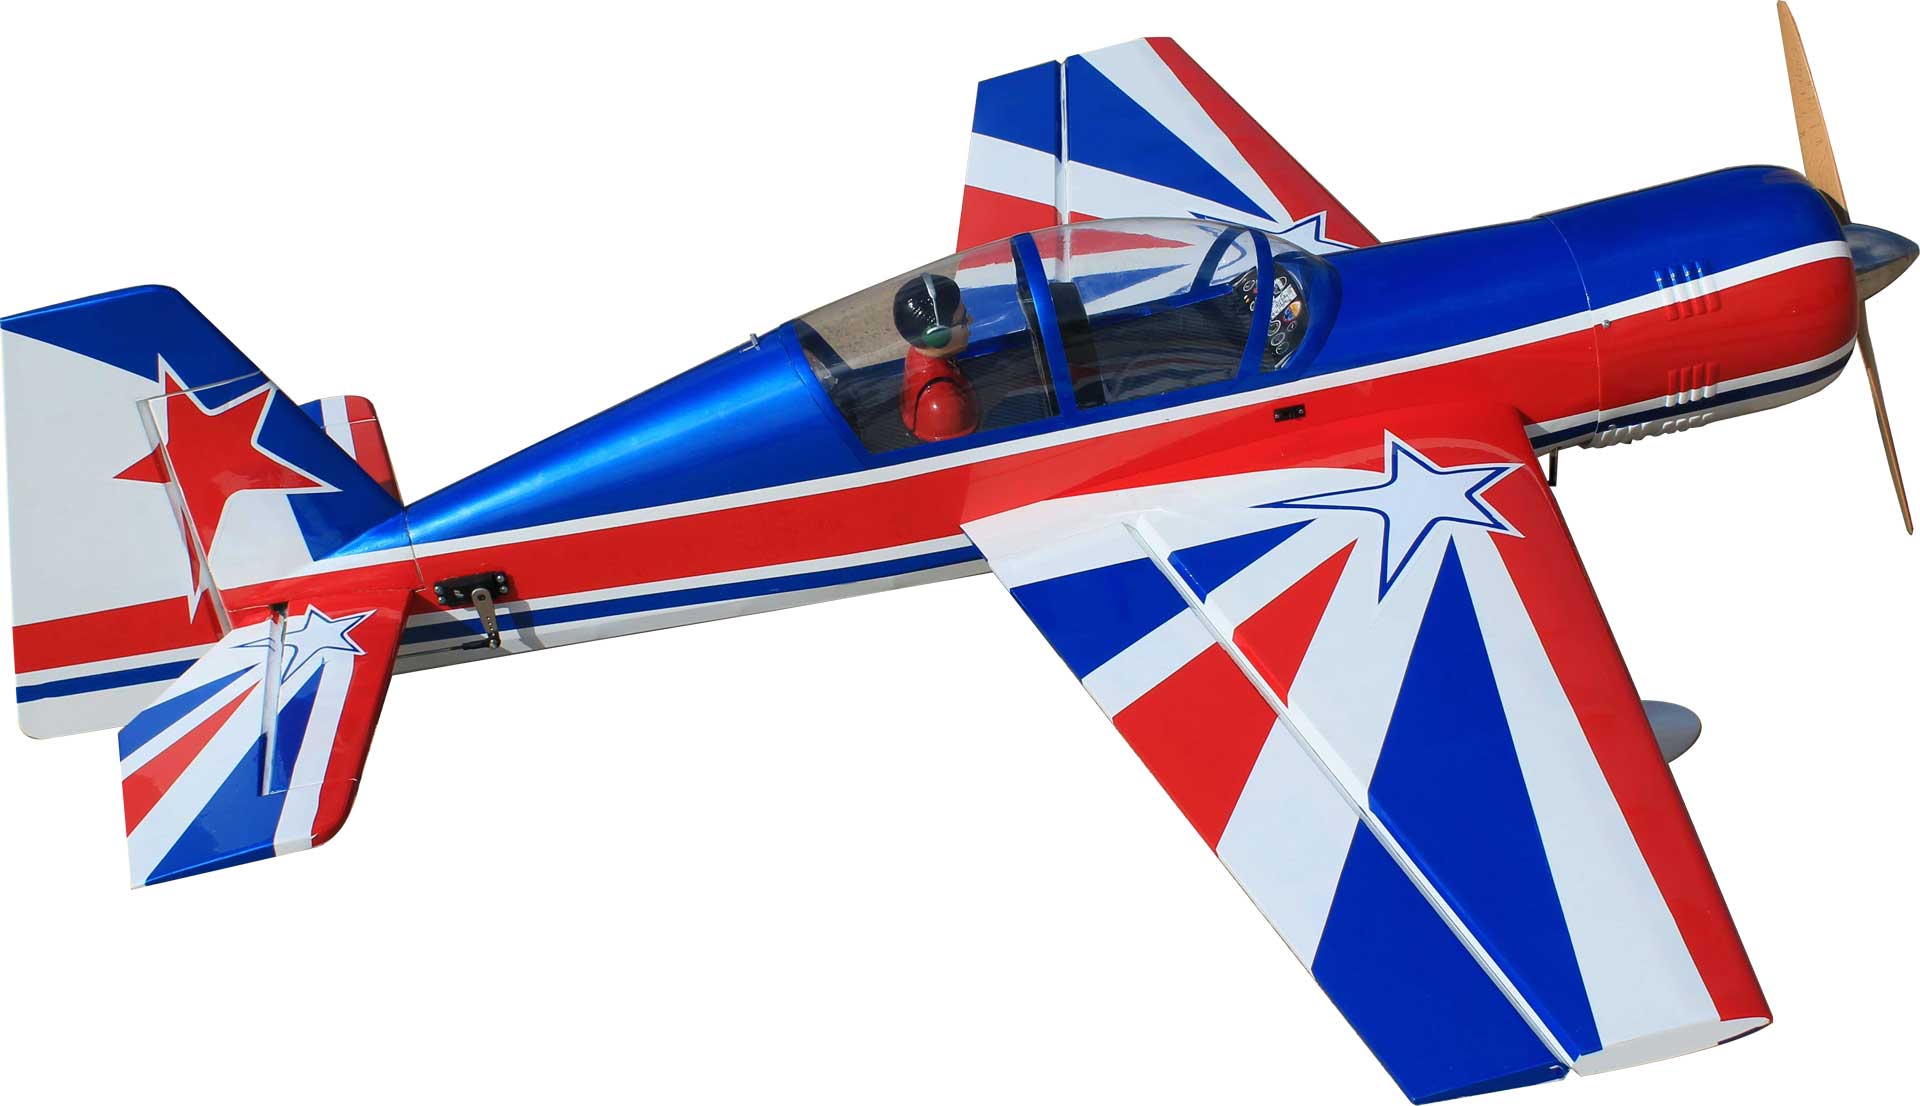 Seagull Models ( SG-Models ) Yak 54 3D ARF 64" 20cc aerobatic model